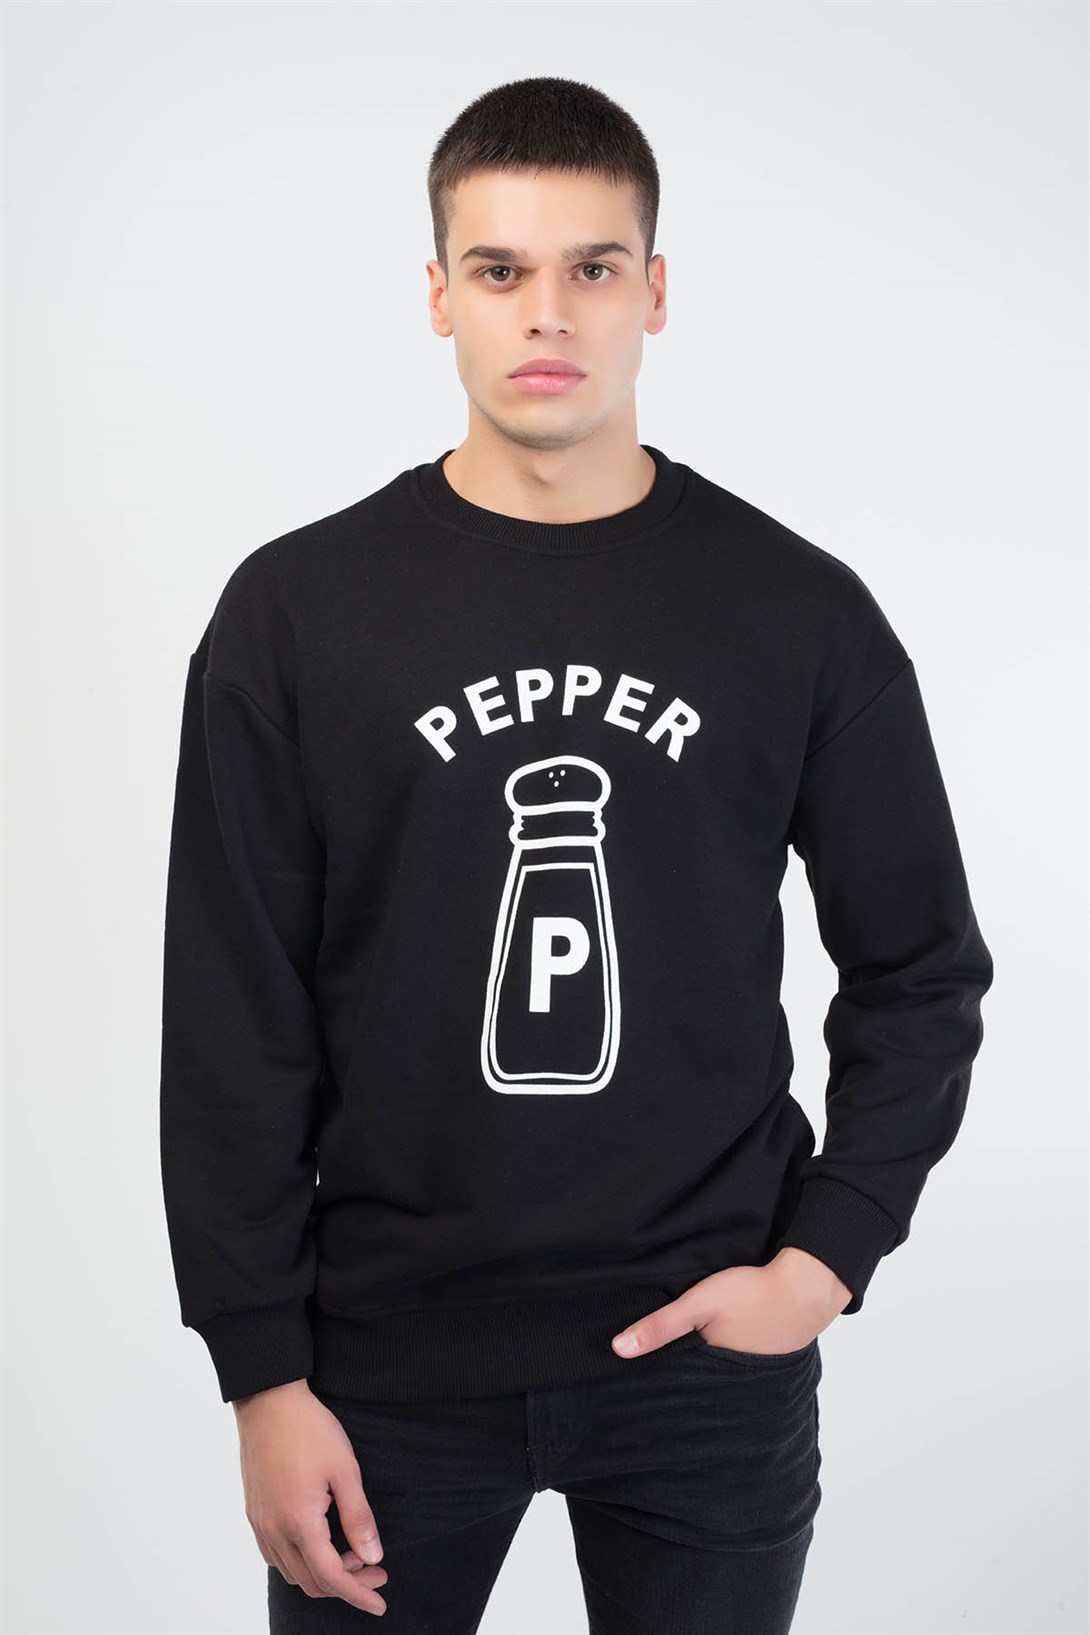 Trendiz Pepper Couple Erkek Yuvarlak Yaka Sweatshirt Siyah 121105